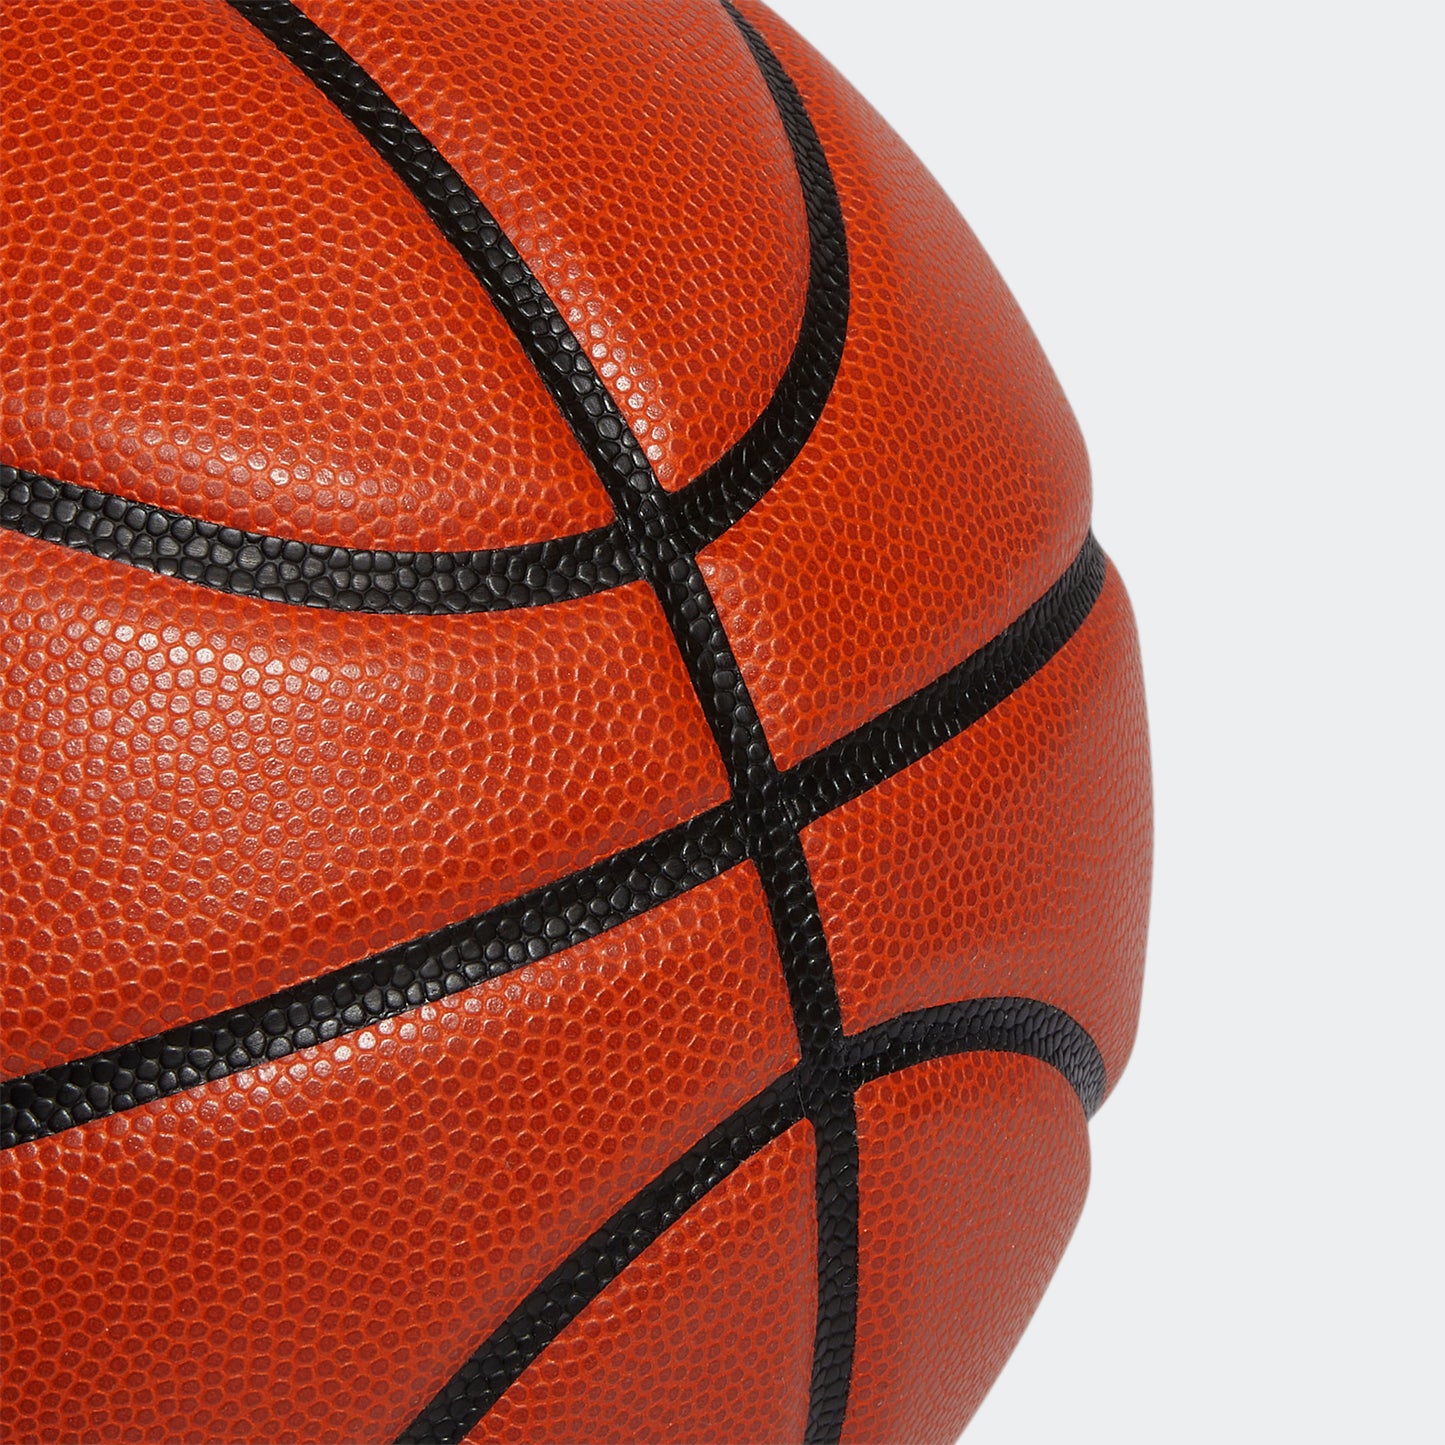 adidas PRO 2.0 Official Game Ball | Basketball Natural